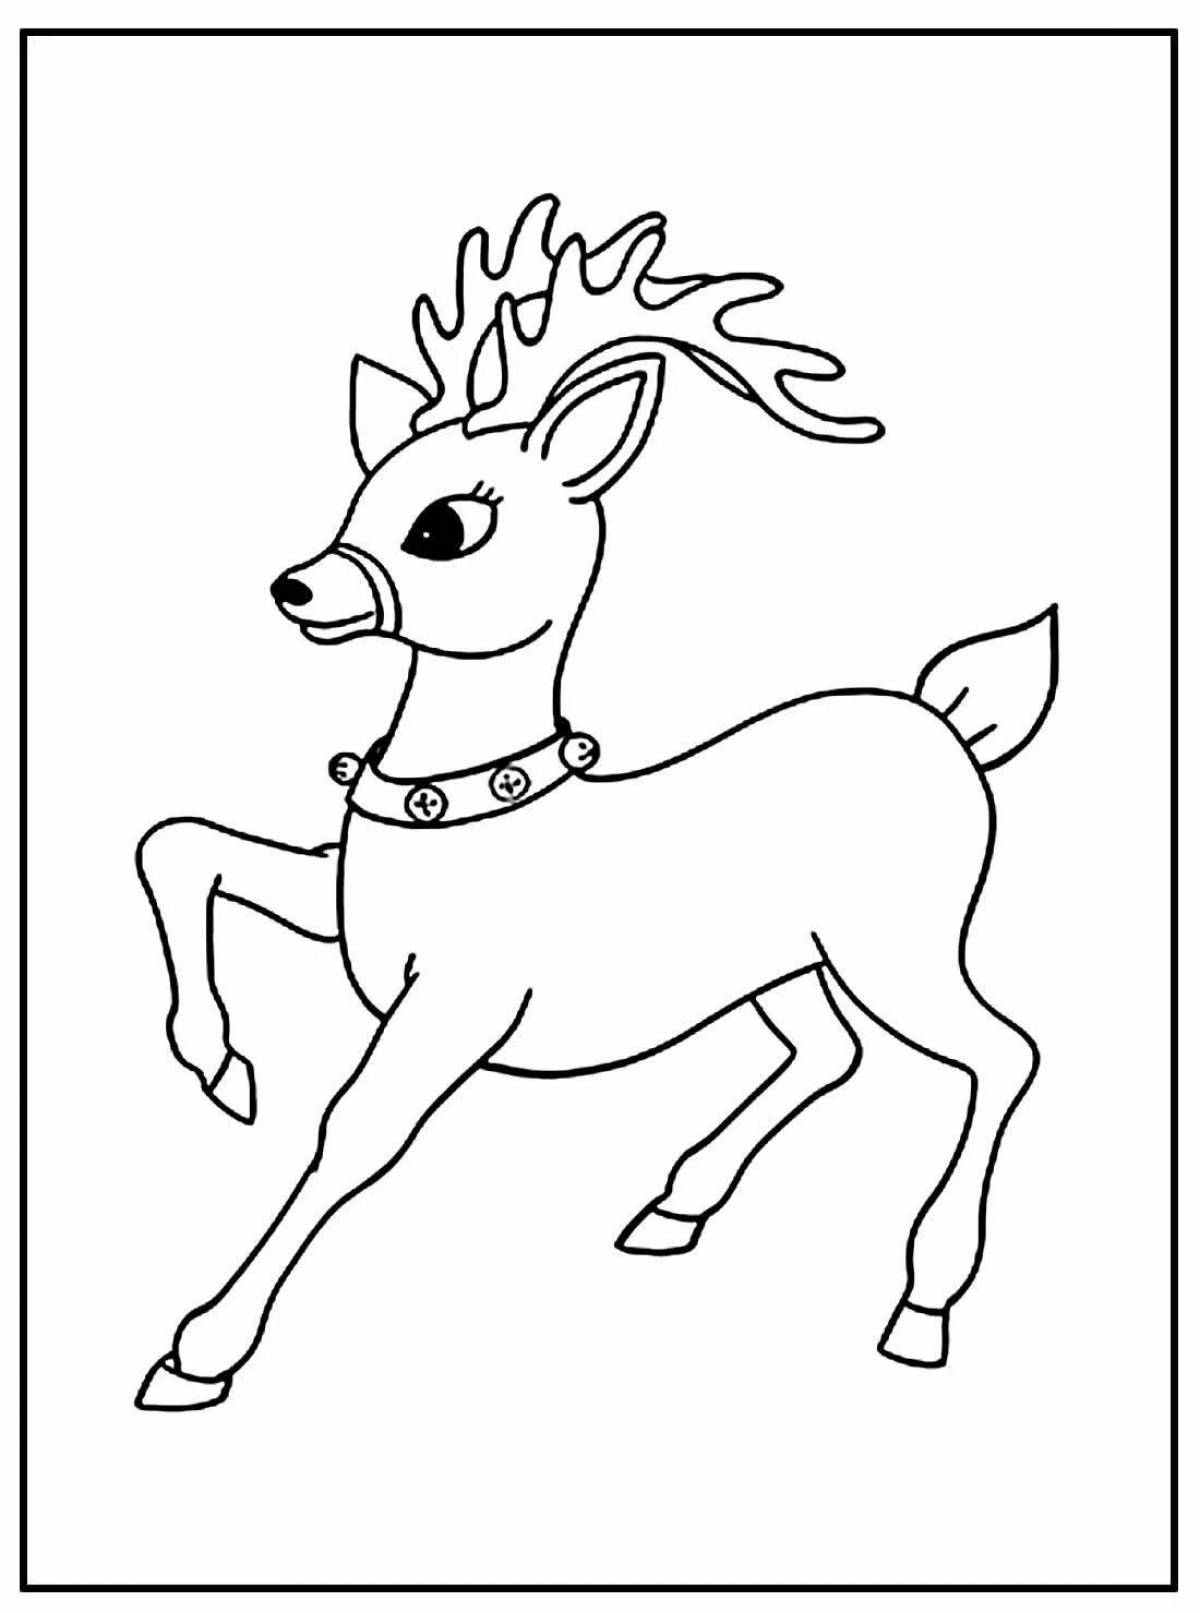 Glorious deer coloring book for kids 6-7 years old